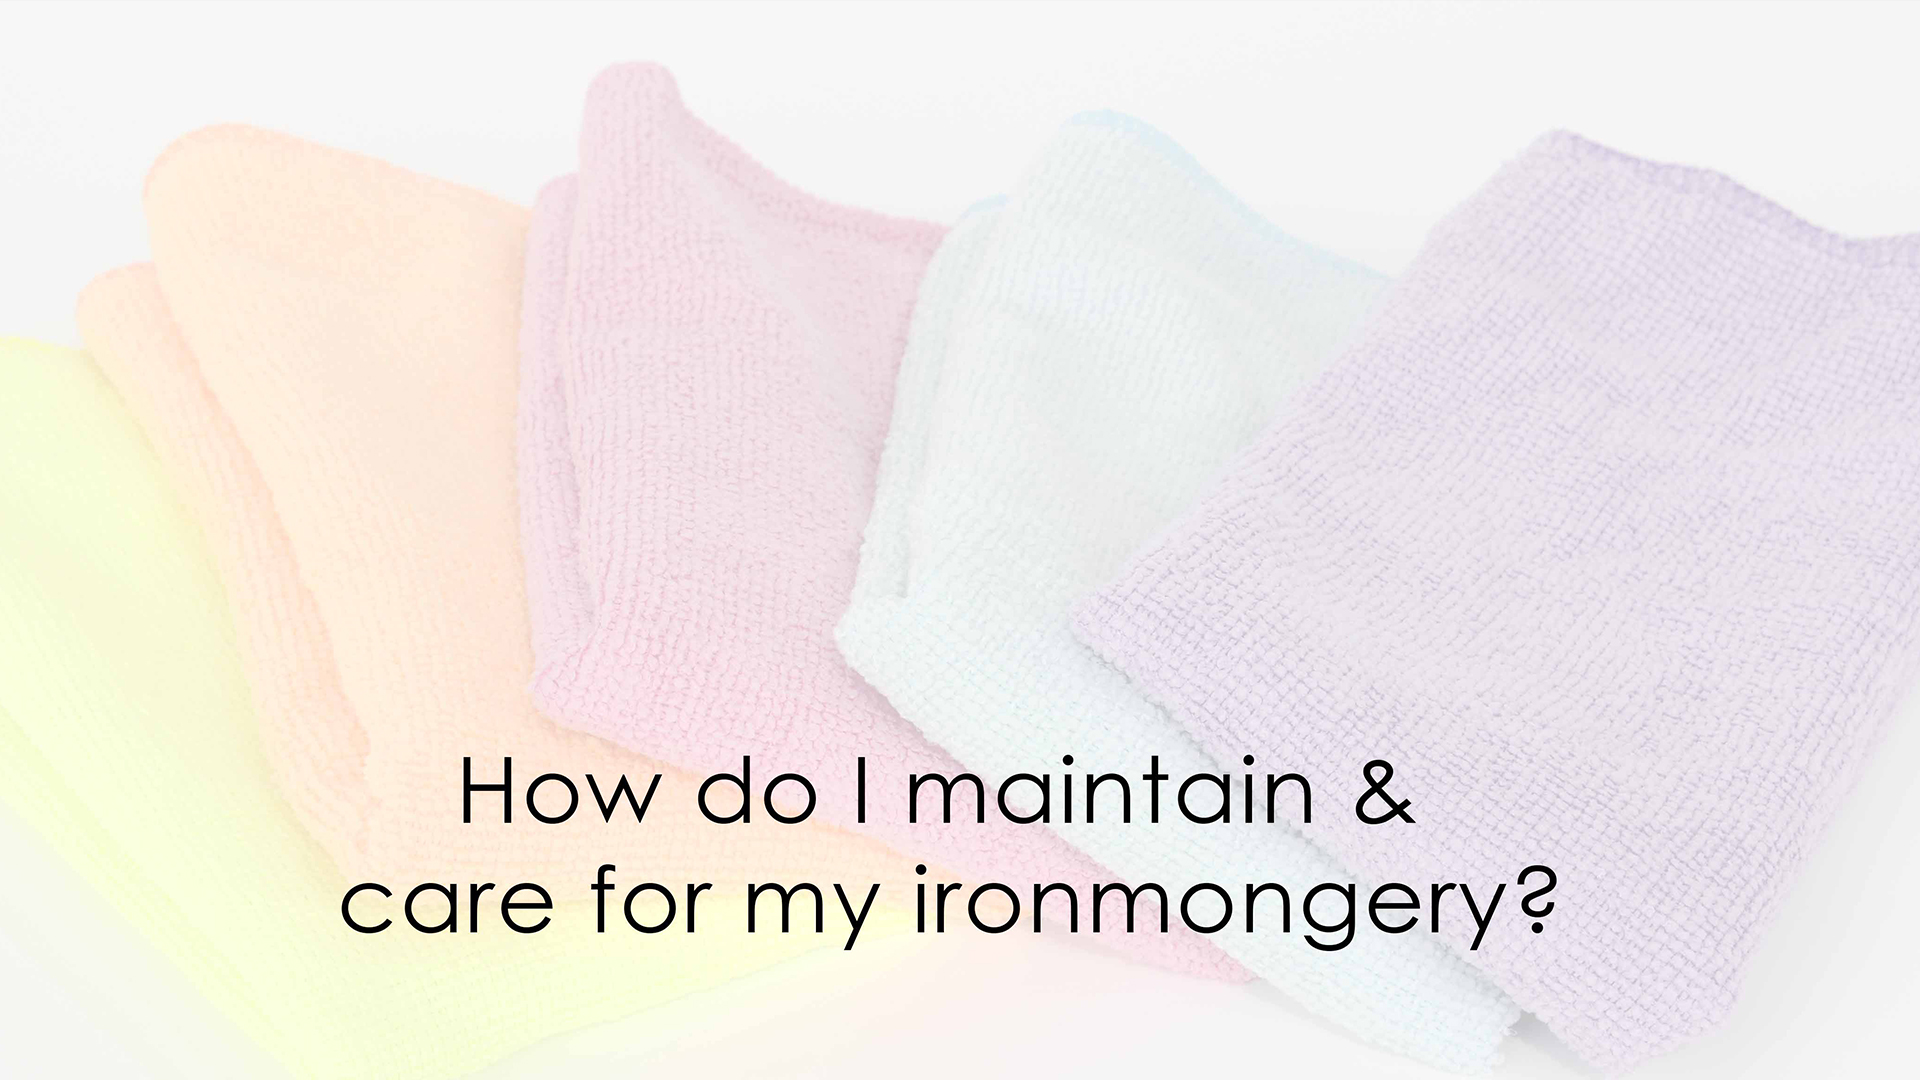 How do I maintain & care for my ironmongery? image